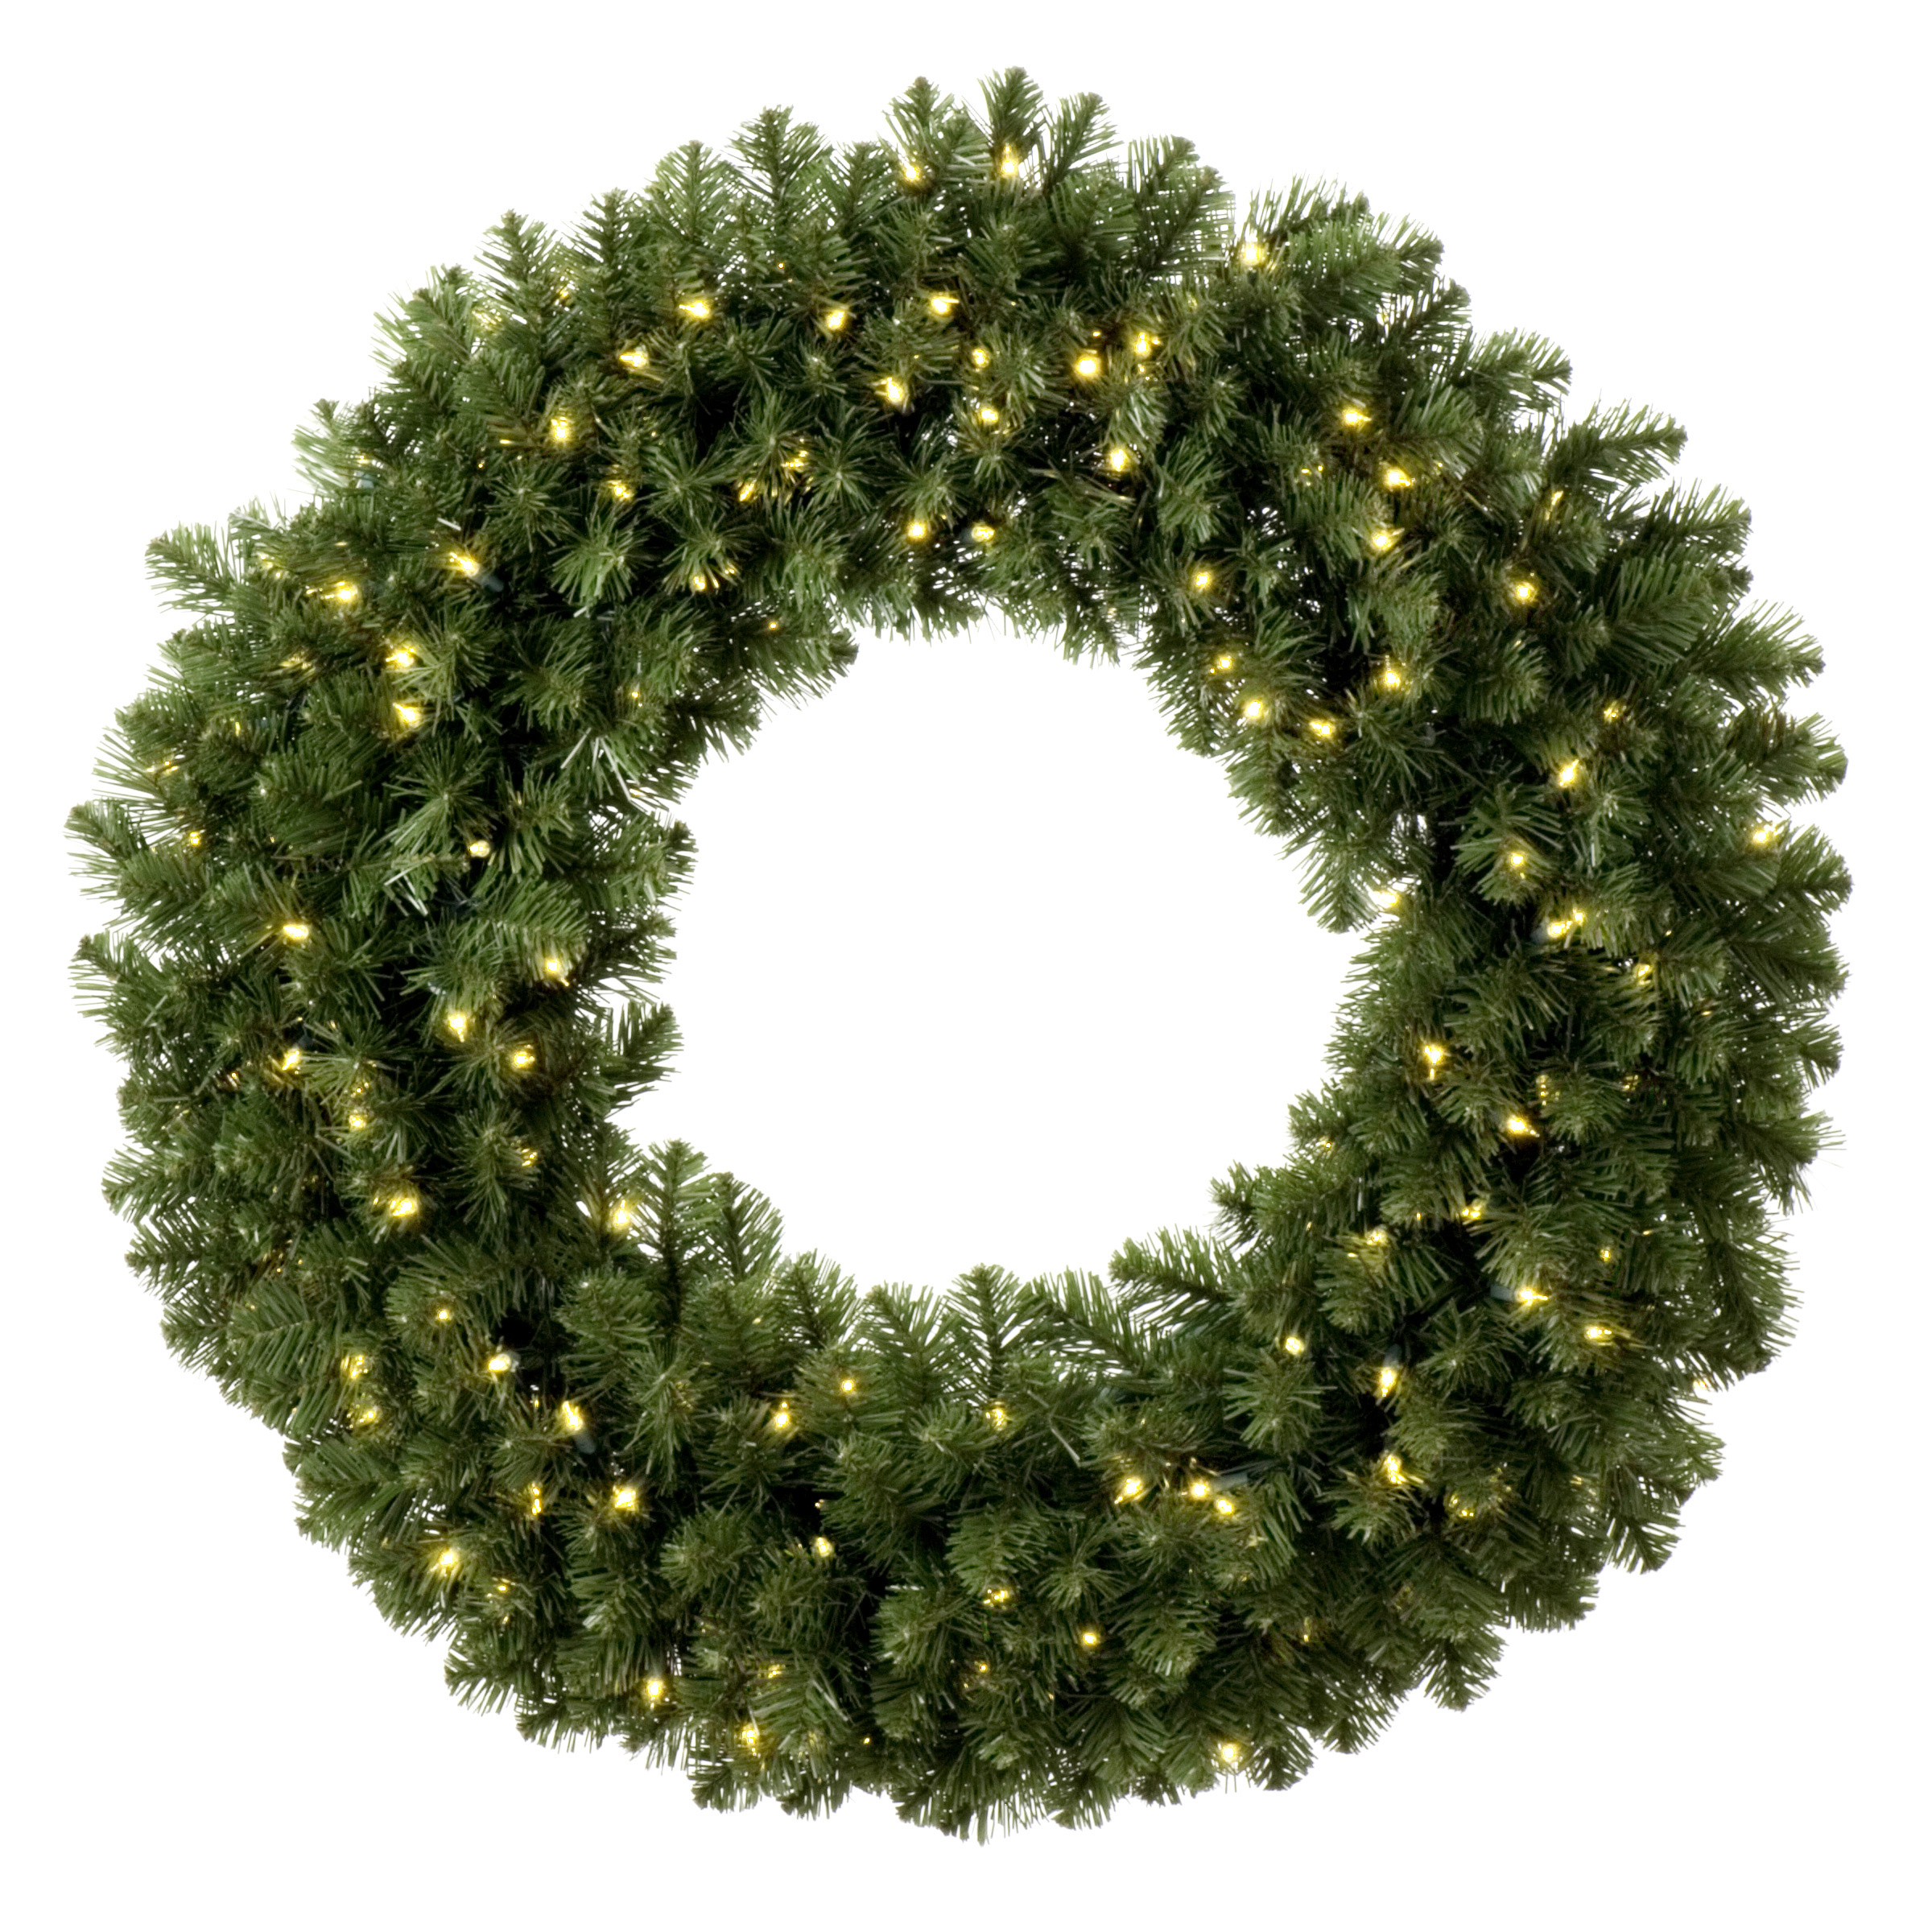 Artificial Christmas Wreaths   Sequoia Fir Prelit Commercial Christmas